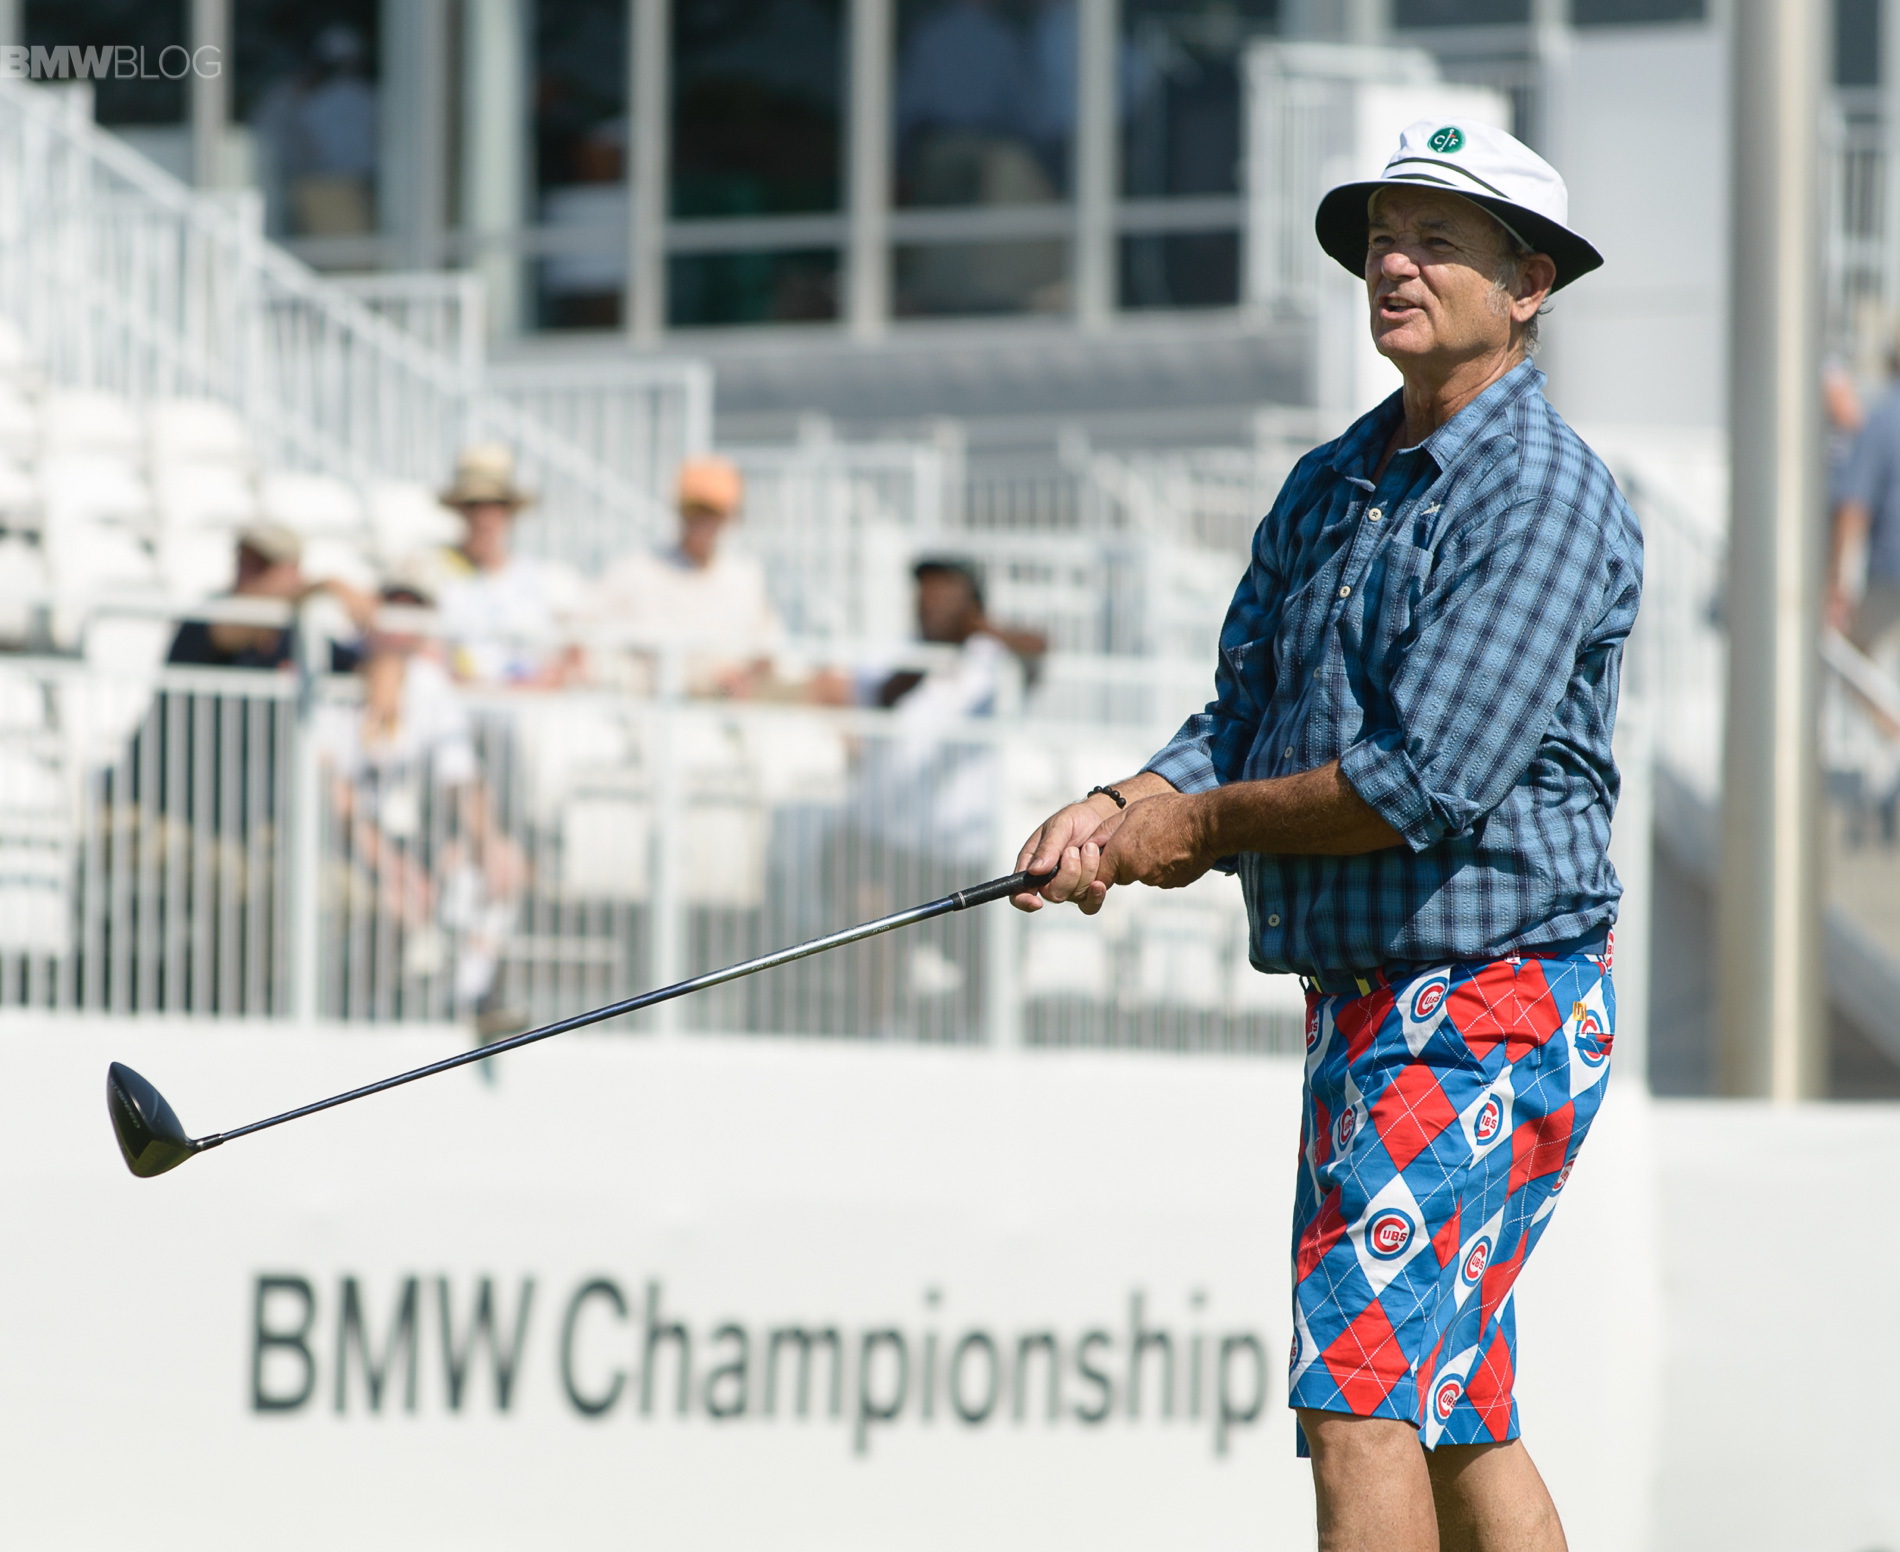 2015 BMW Golf Championship images 01